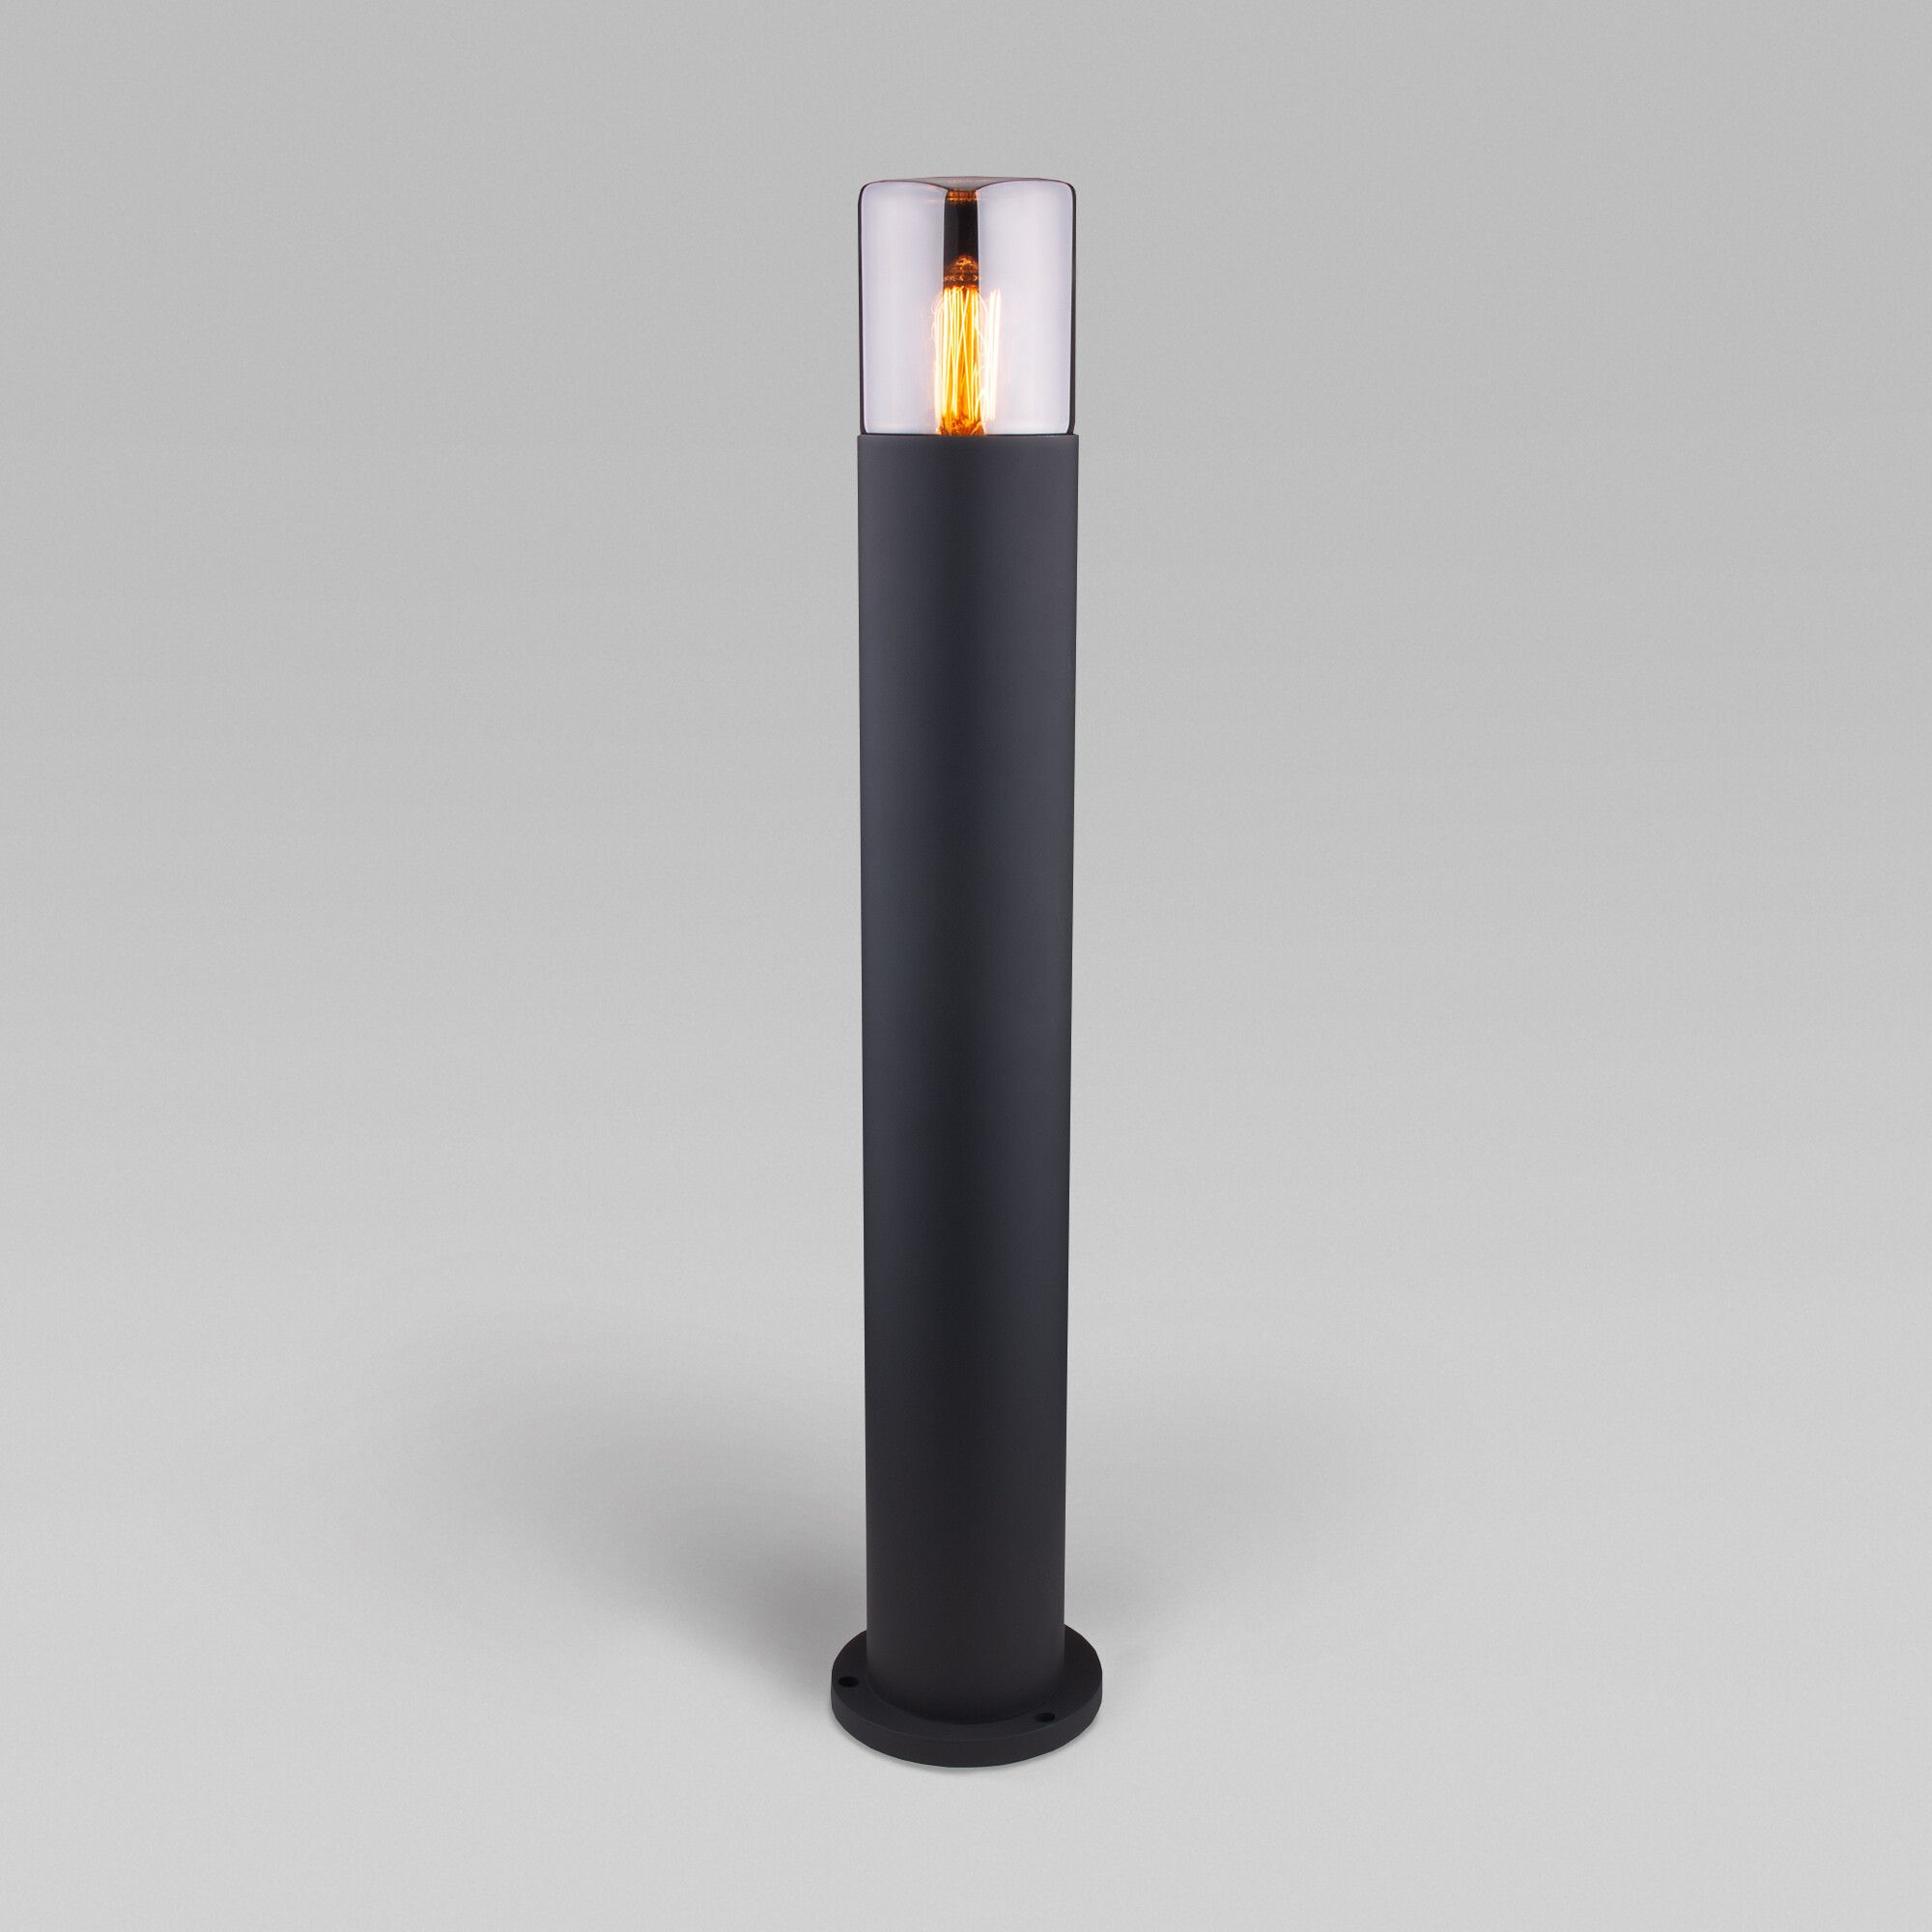 Ландшафтный светильник Roil IP54 чёрный/дымчатый плафон 35125/F 35125/F